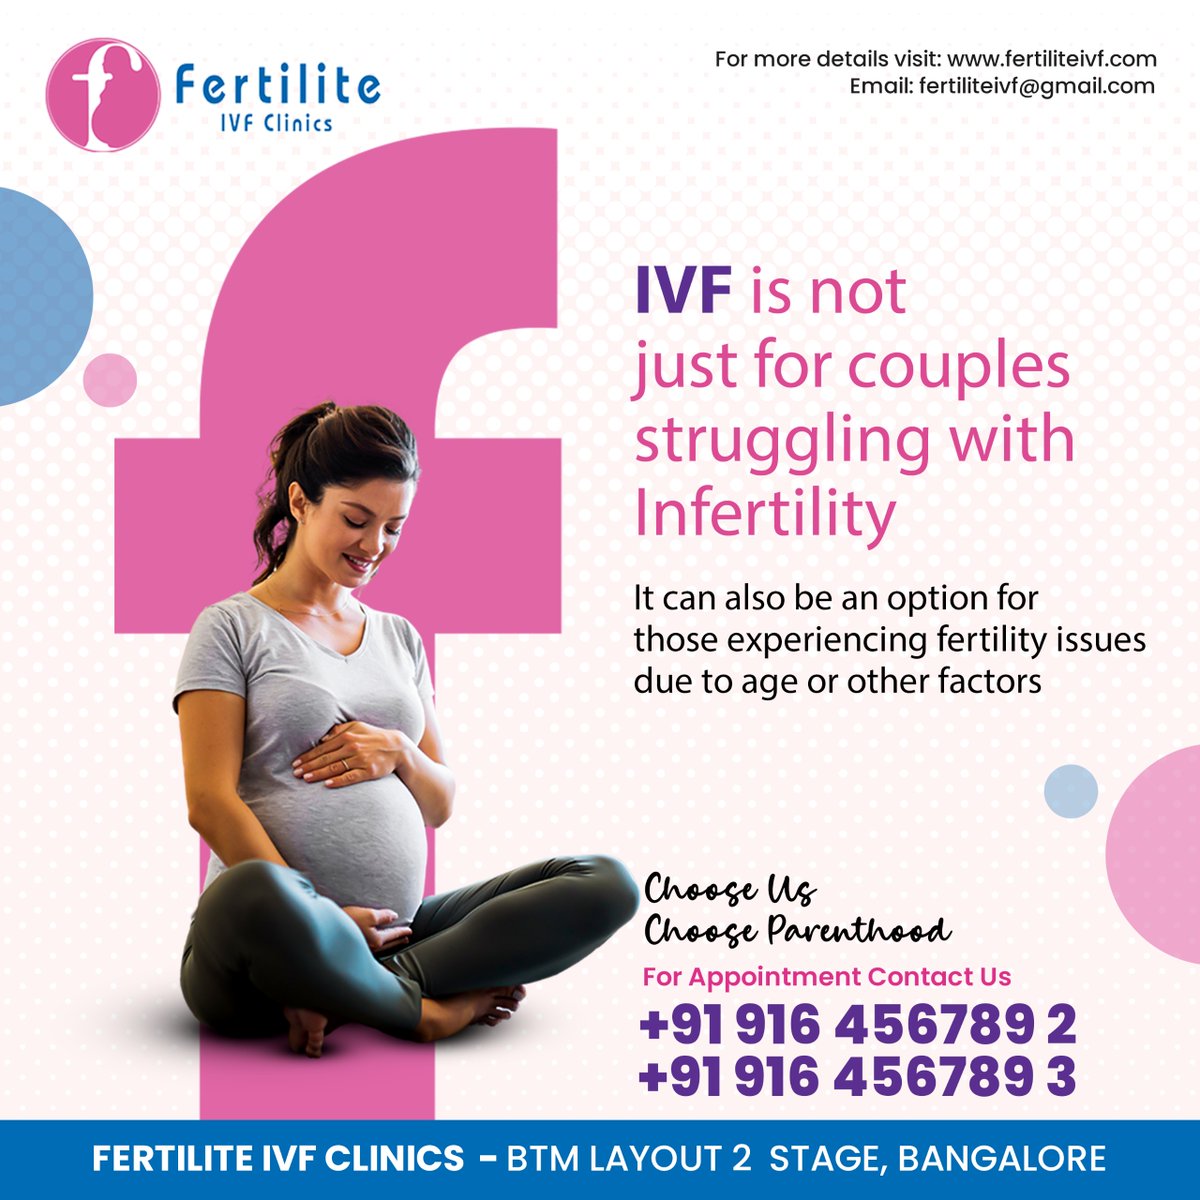 🌟✨ Struggling with fertility? Don't lose hope! 🌟✨
📍 Location: BTM Layout 2 Stage, Bangalore

Visit our website for more details: fertiliteivf.com

#FertiliteIVF #Parenthood #IVFTreatment #FertilityCare #BangaloreIVF #ChooseHope
#FertiliteIVF #Parenthood